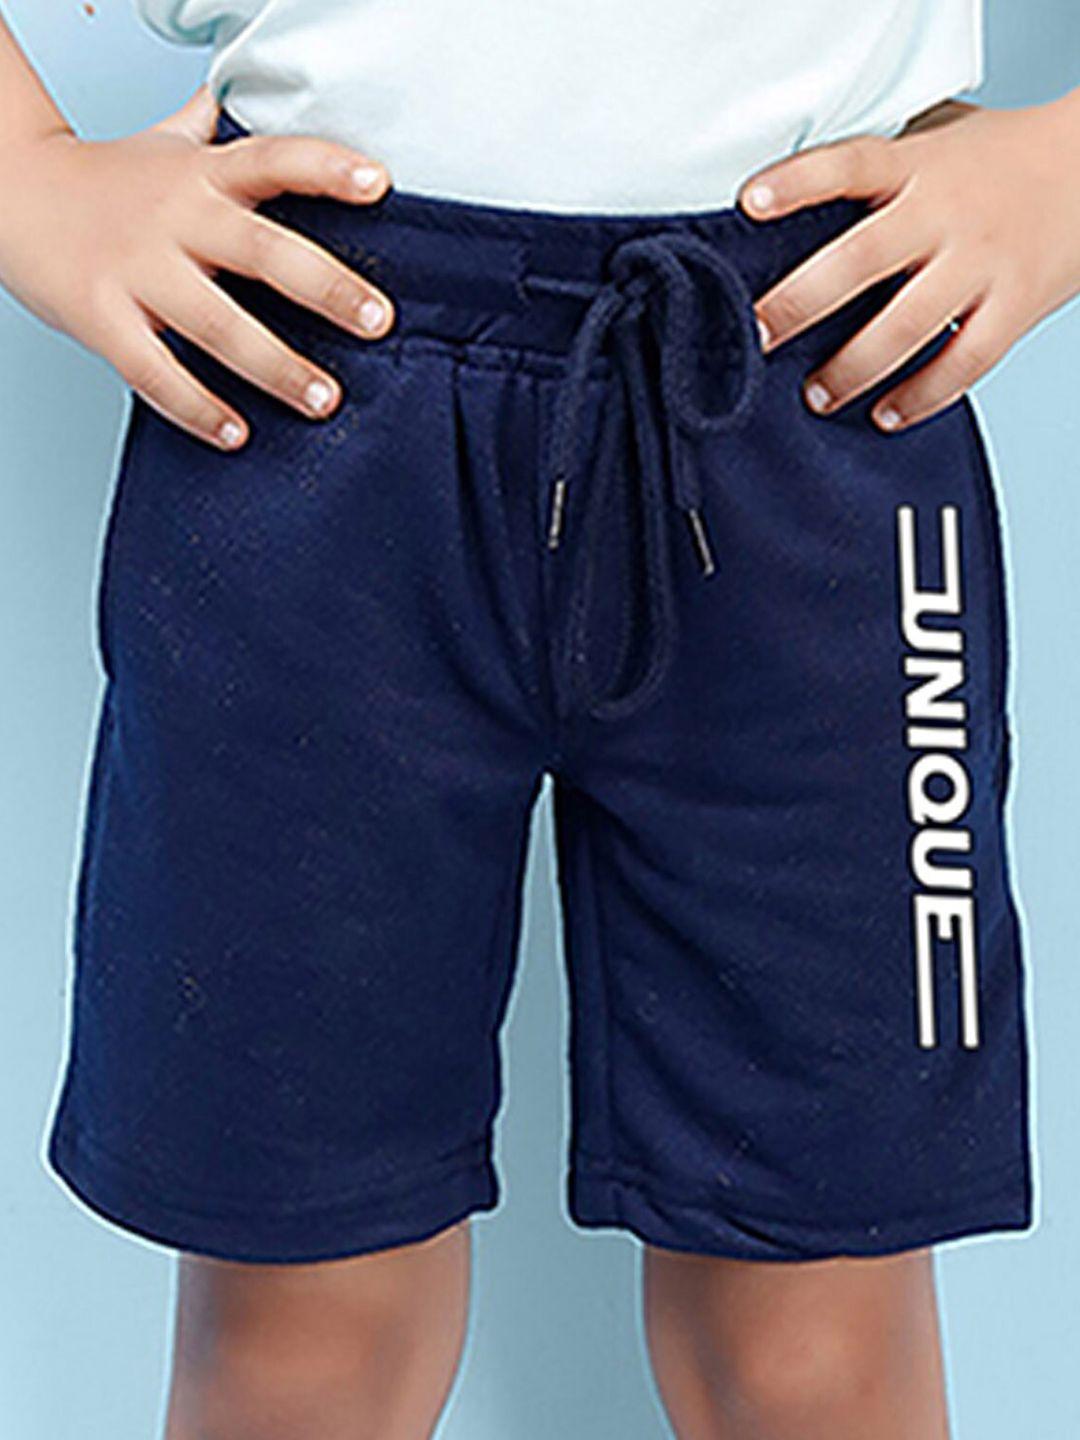 nusyl-boys-mid-rise-typography-printed-shorts